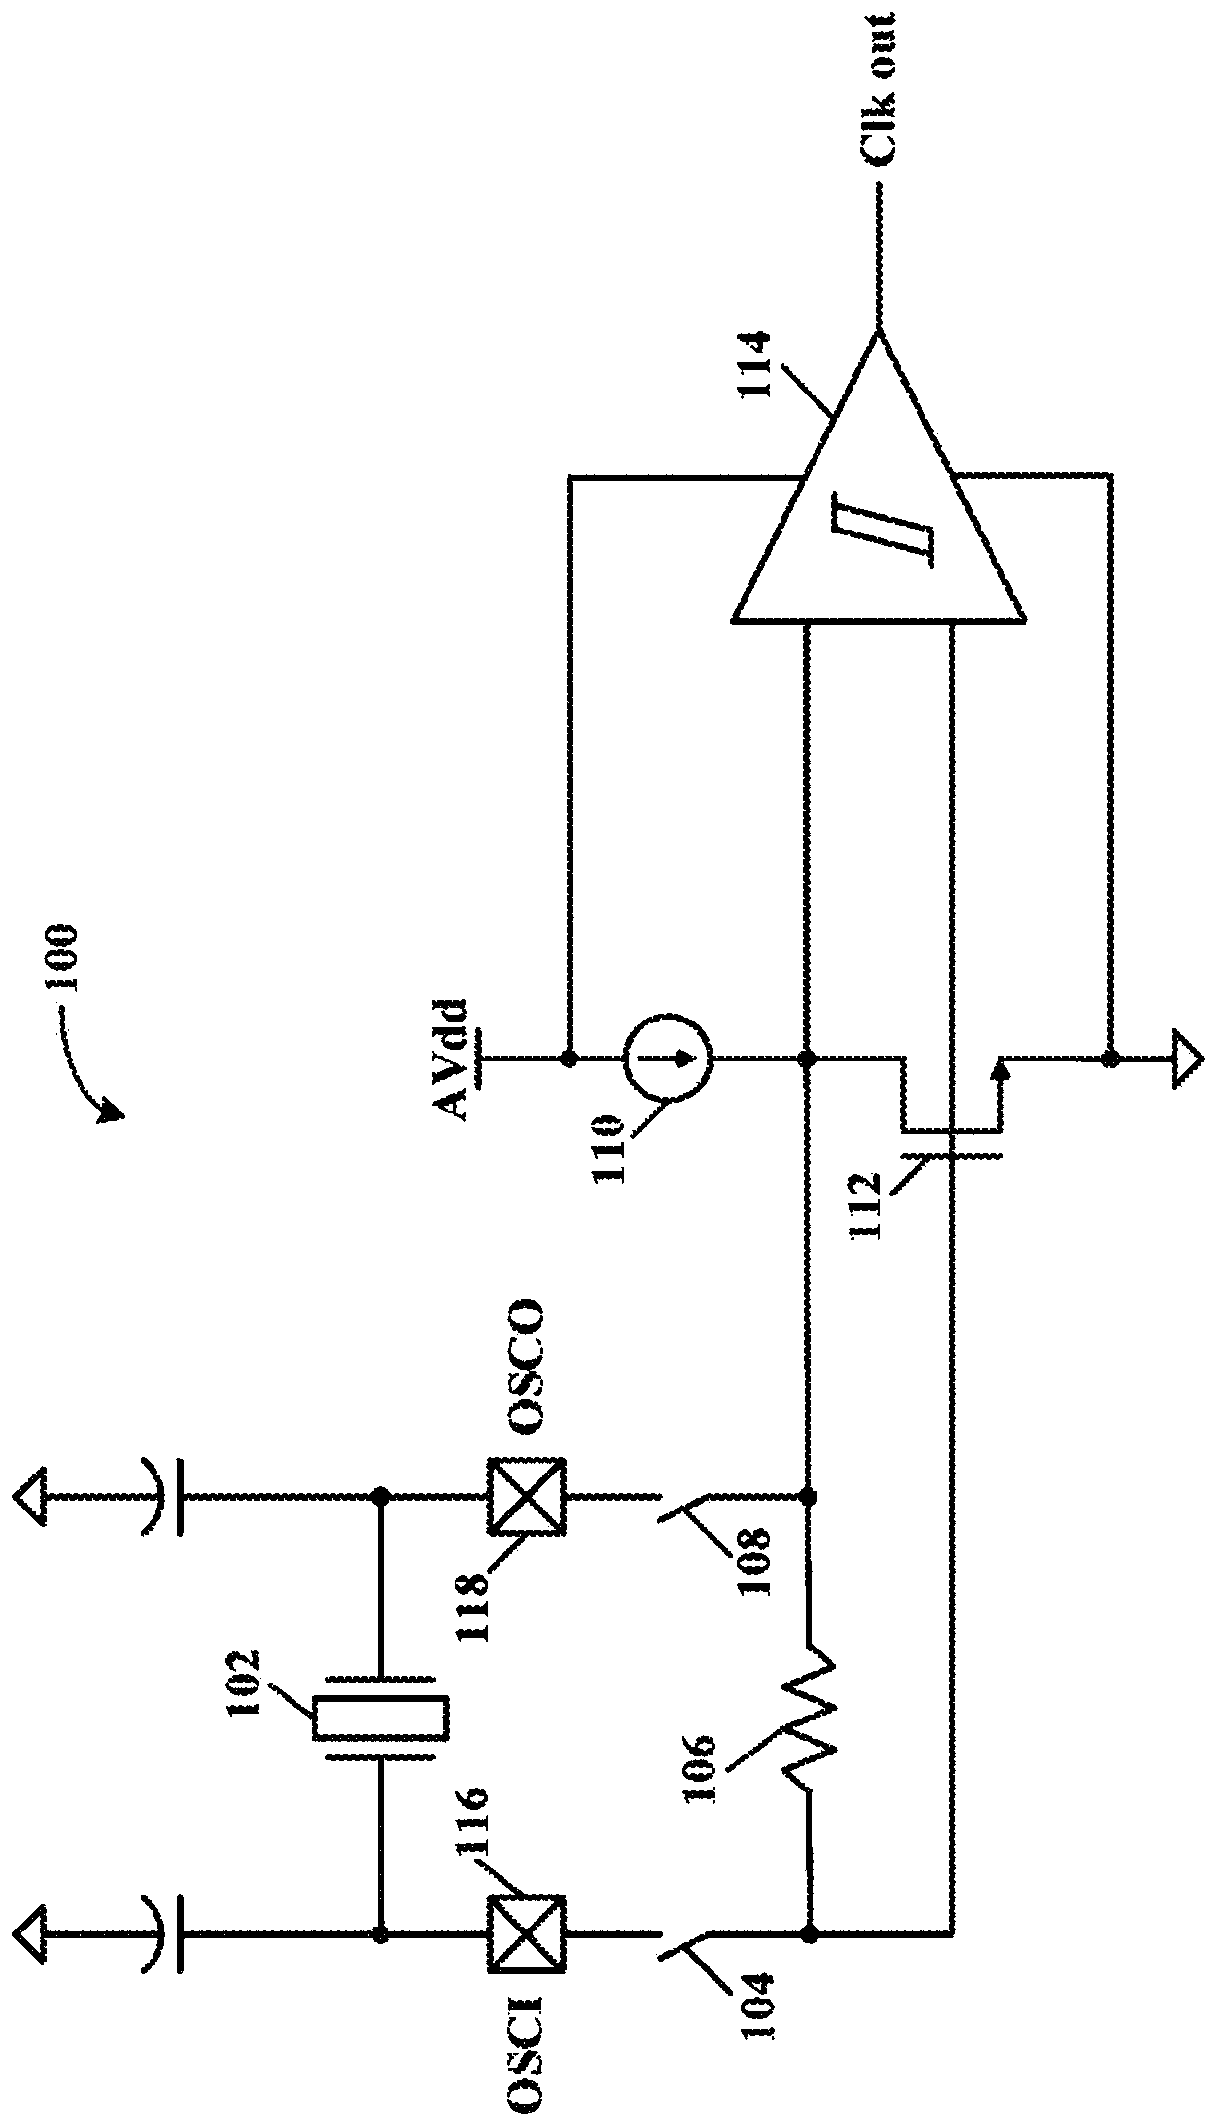 Low-voltage crystal oscillator circuit compatible with GPIO